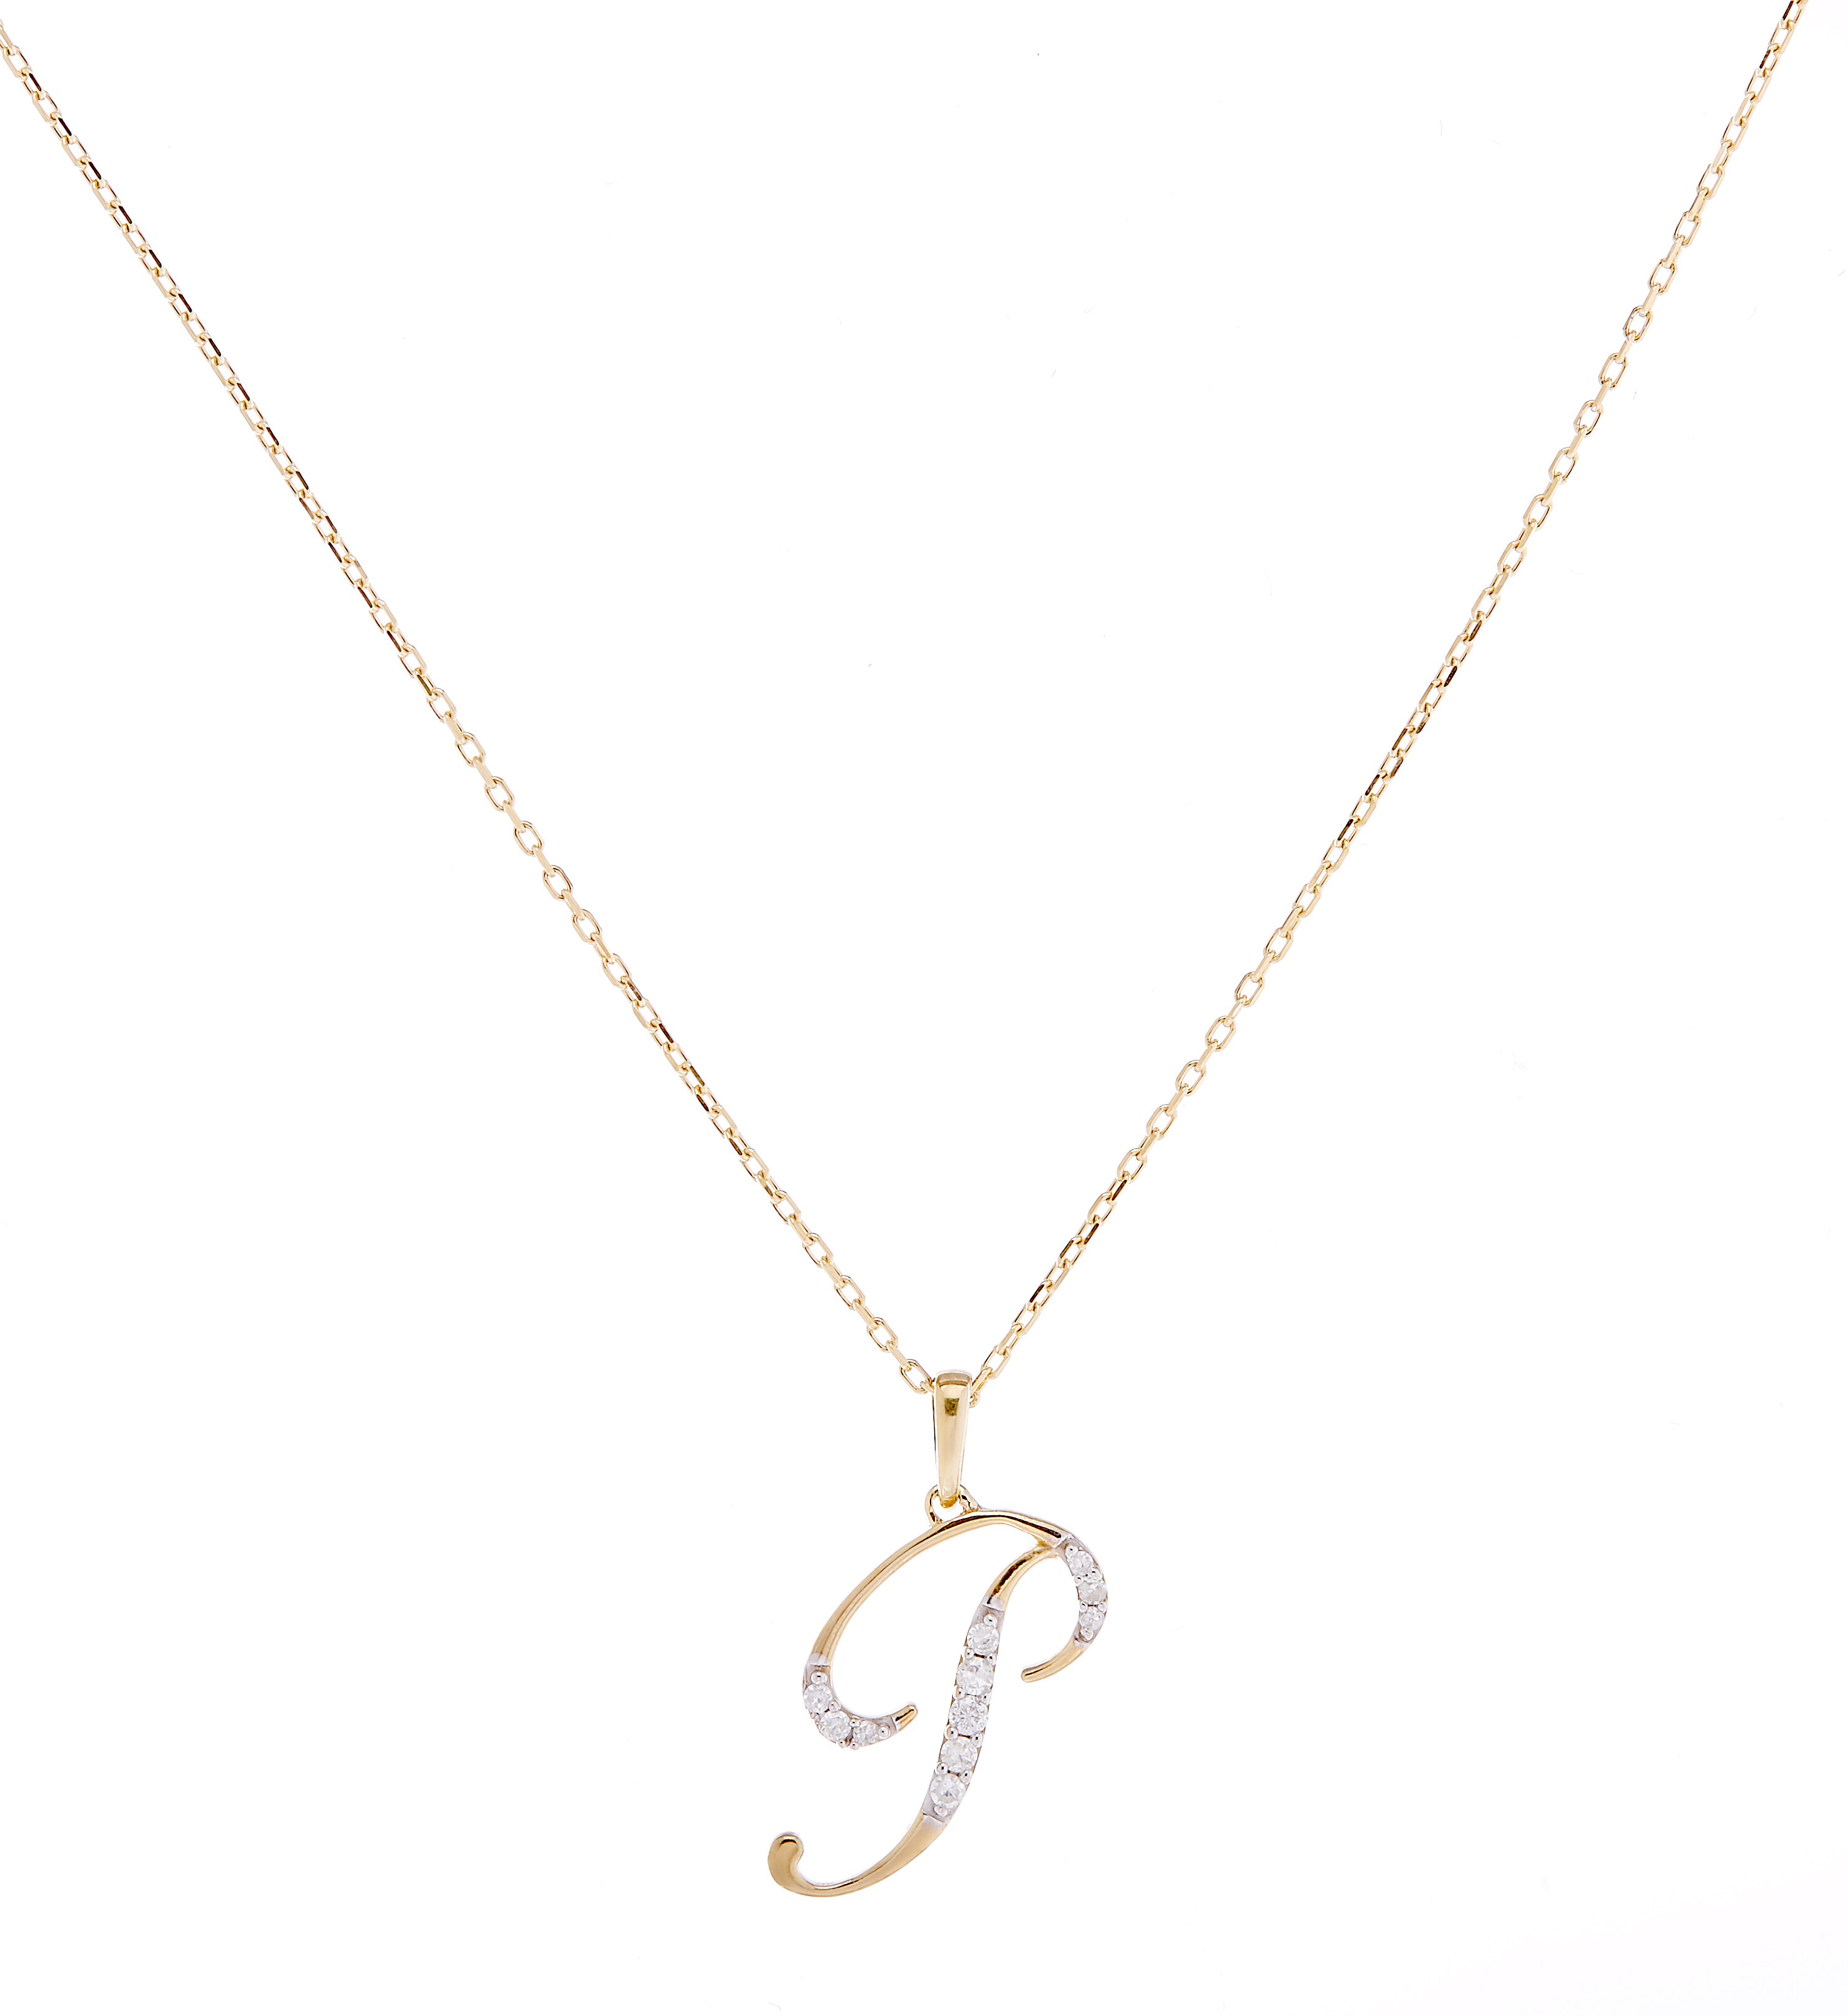 Jewellery - Necklaces & Pendants - Pendant Necklaces - Sterling